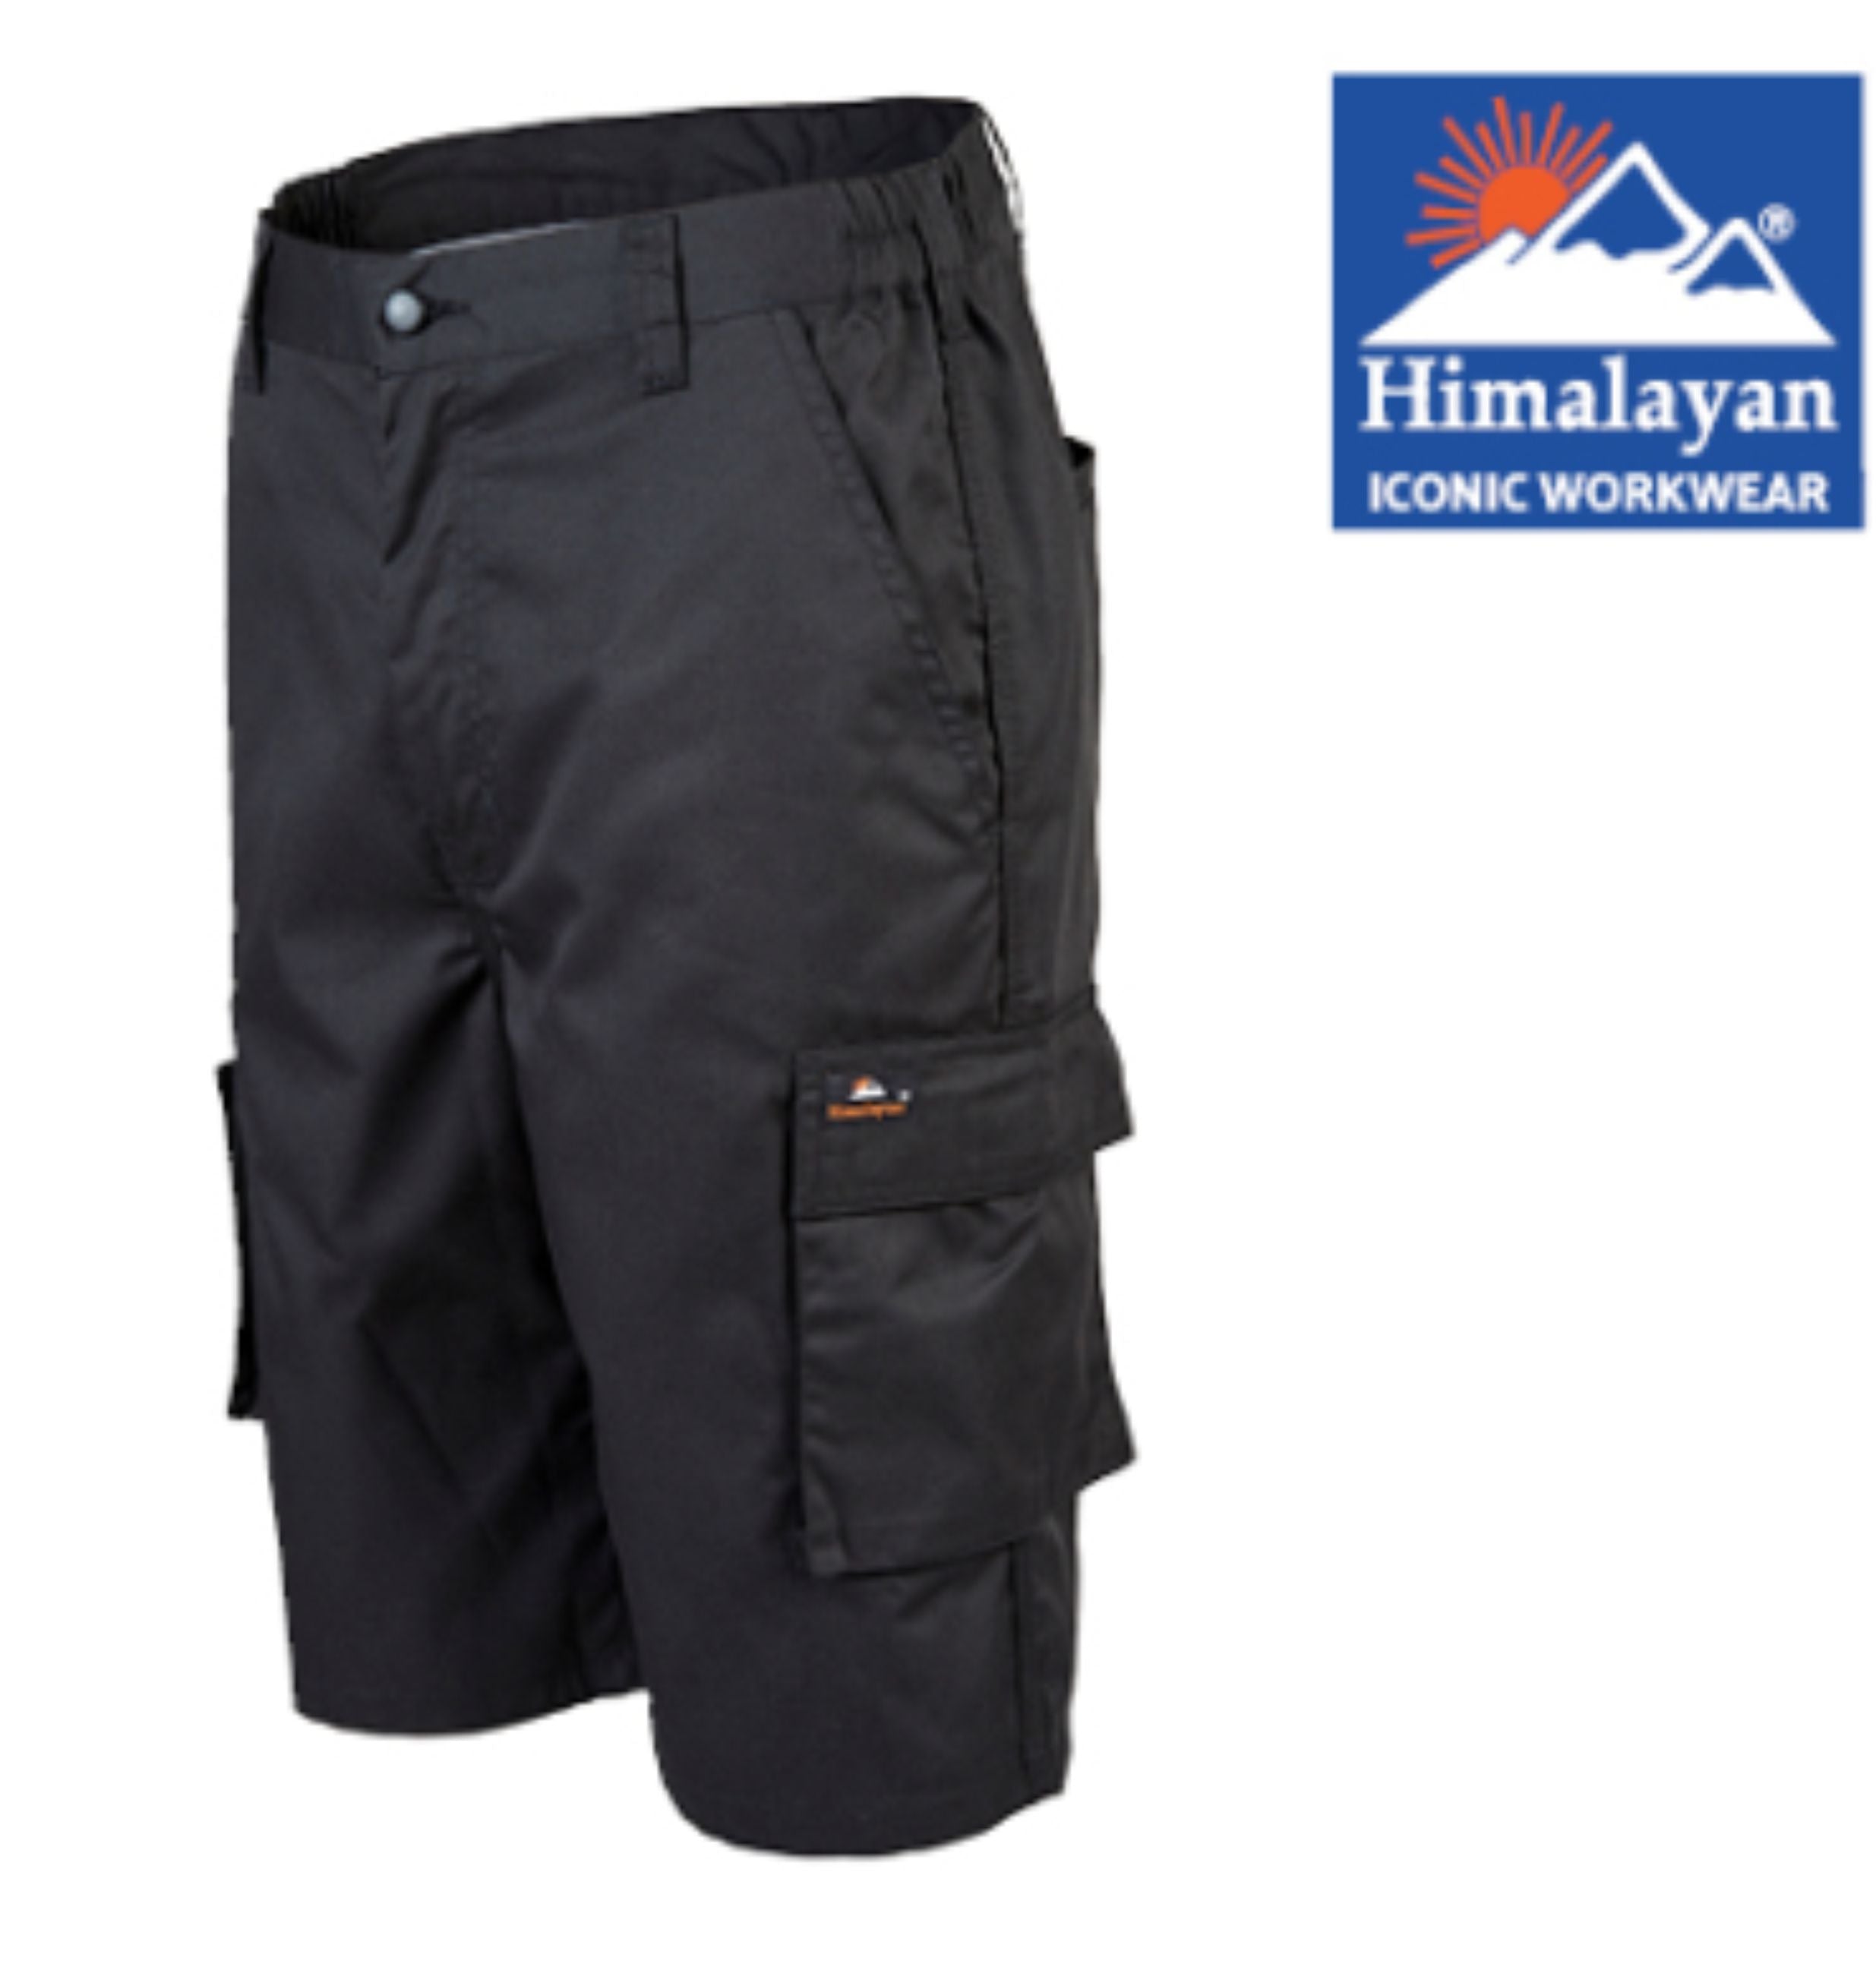 Himalayan Icon Basic Black Work Shorts